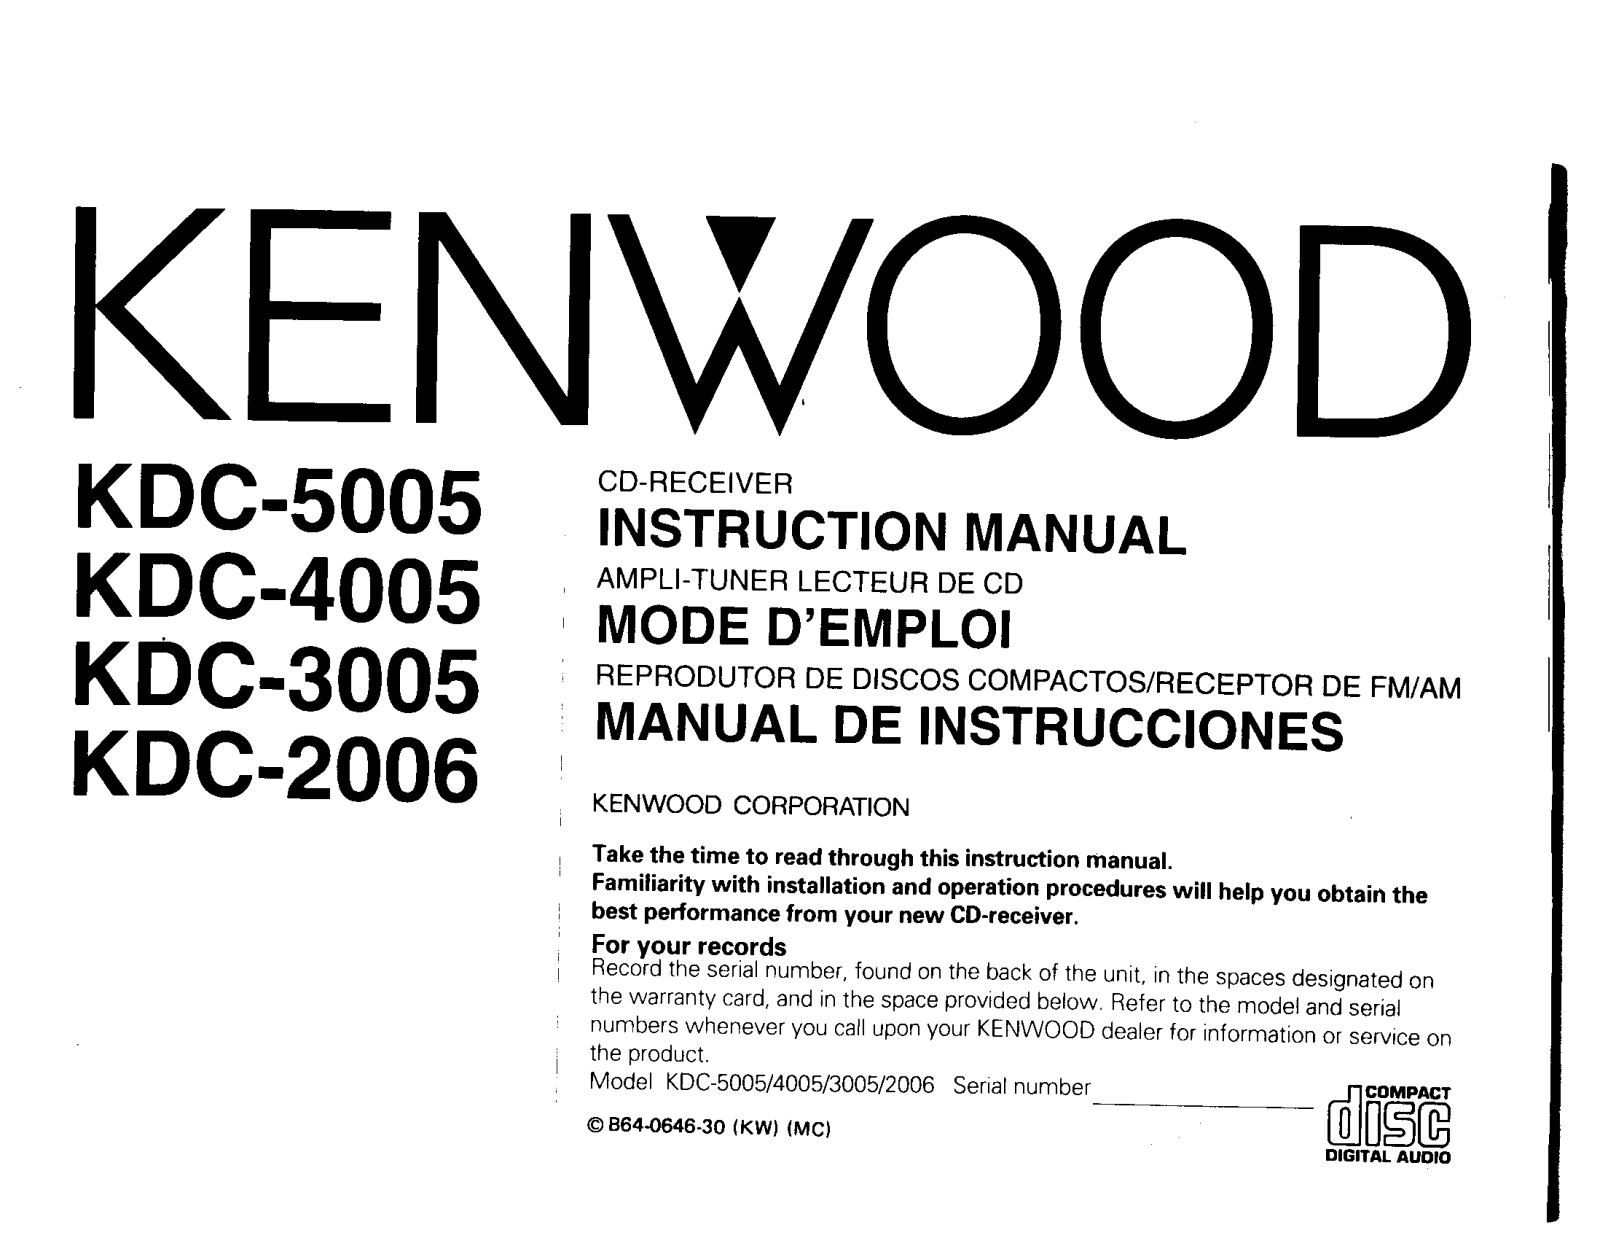 Kenwood KDC-5005, KDC-4005, KDC-2006, KDC-3005 Owner's Manual